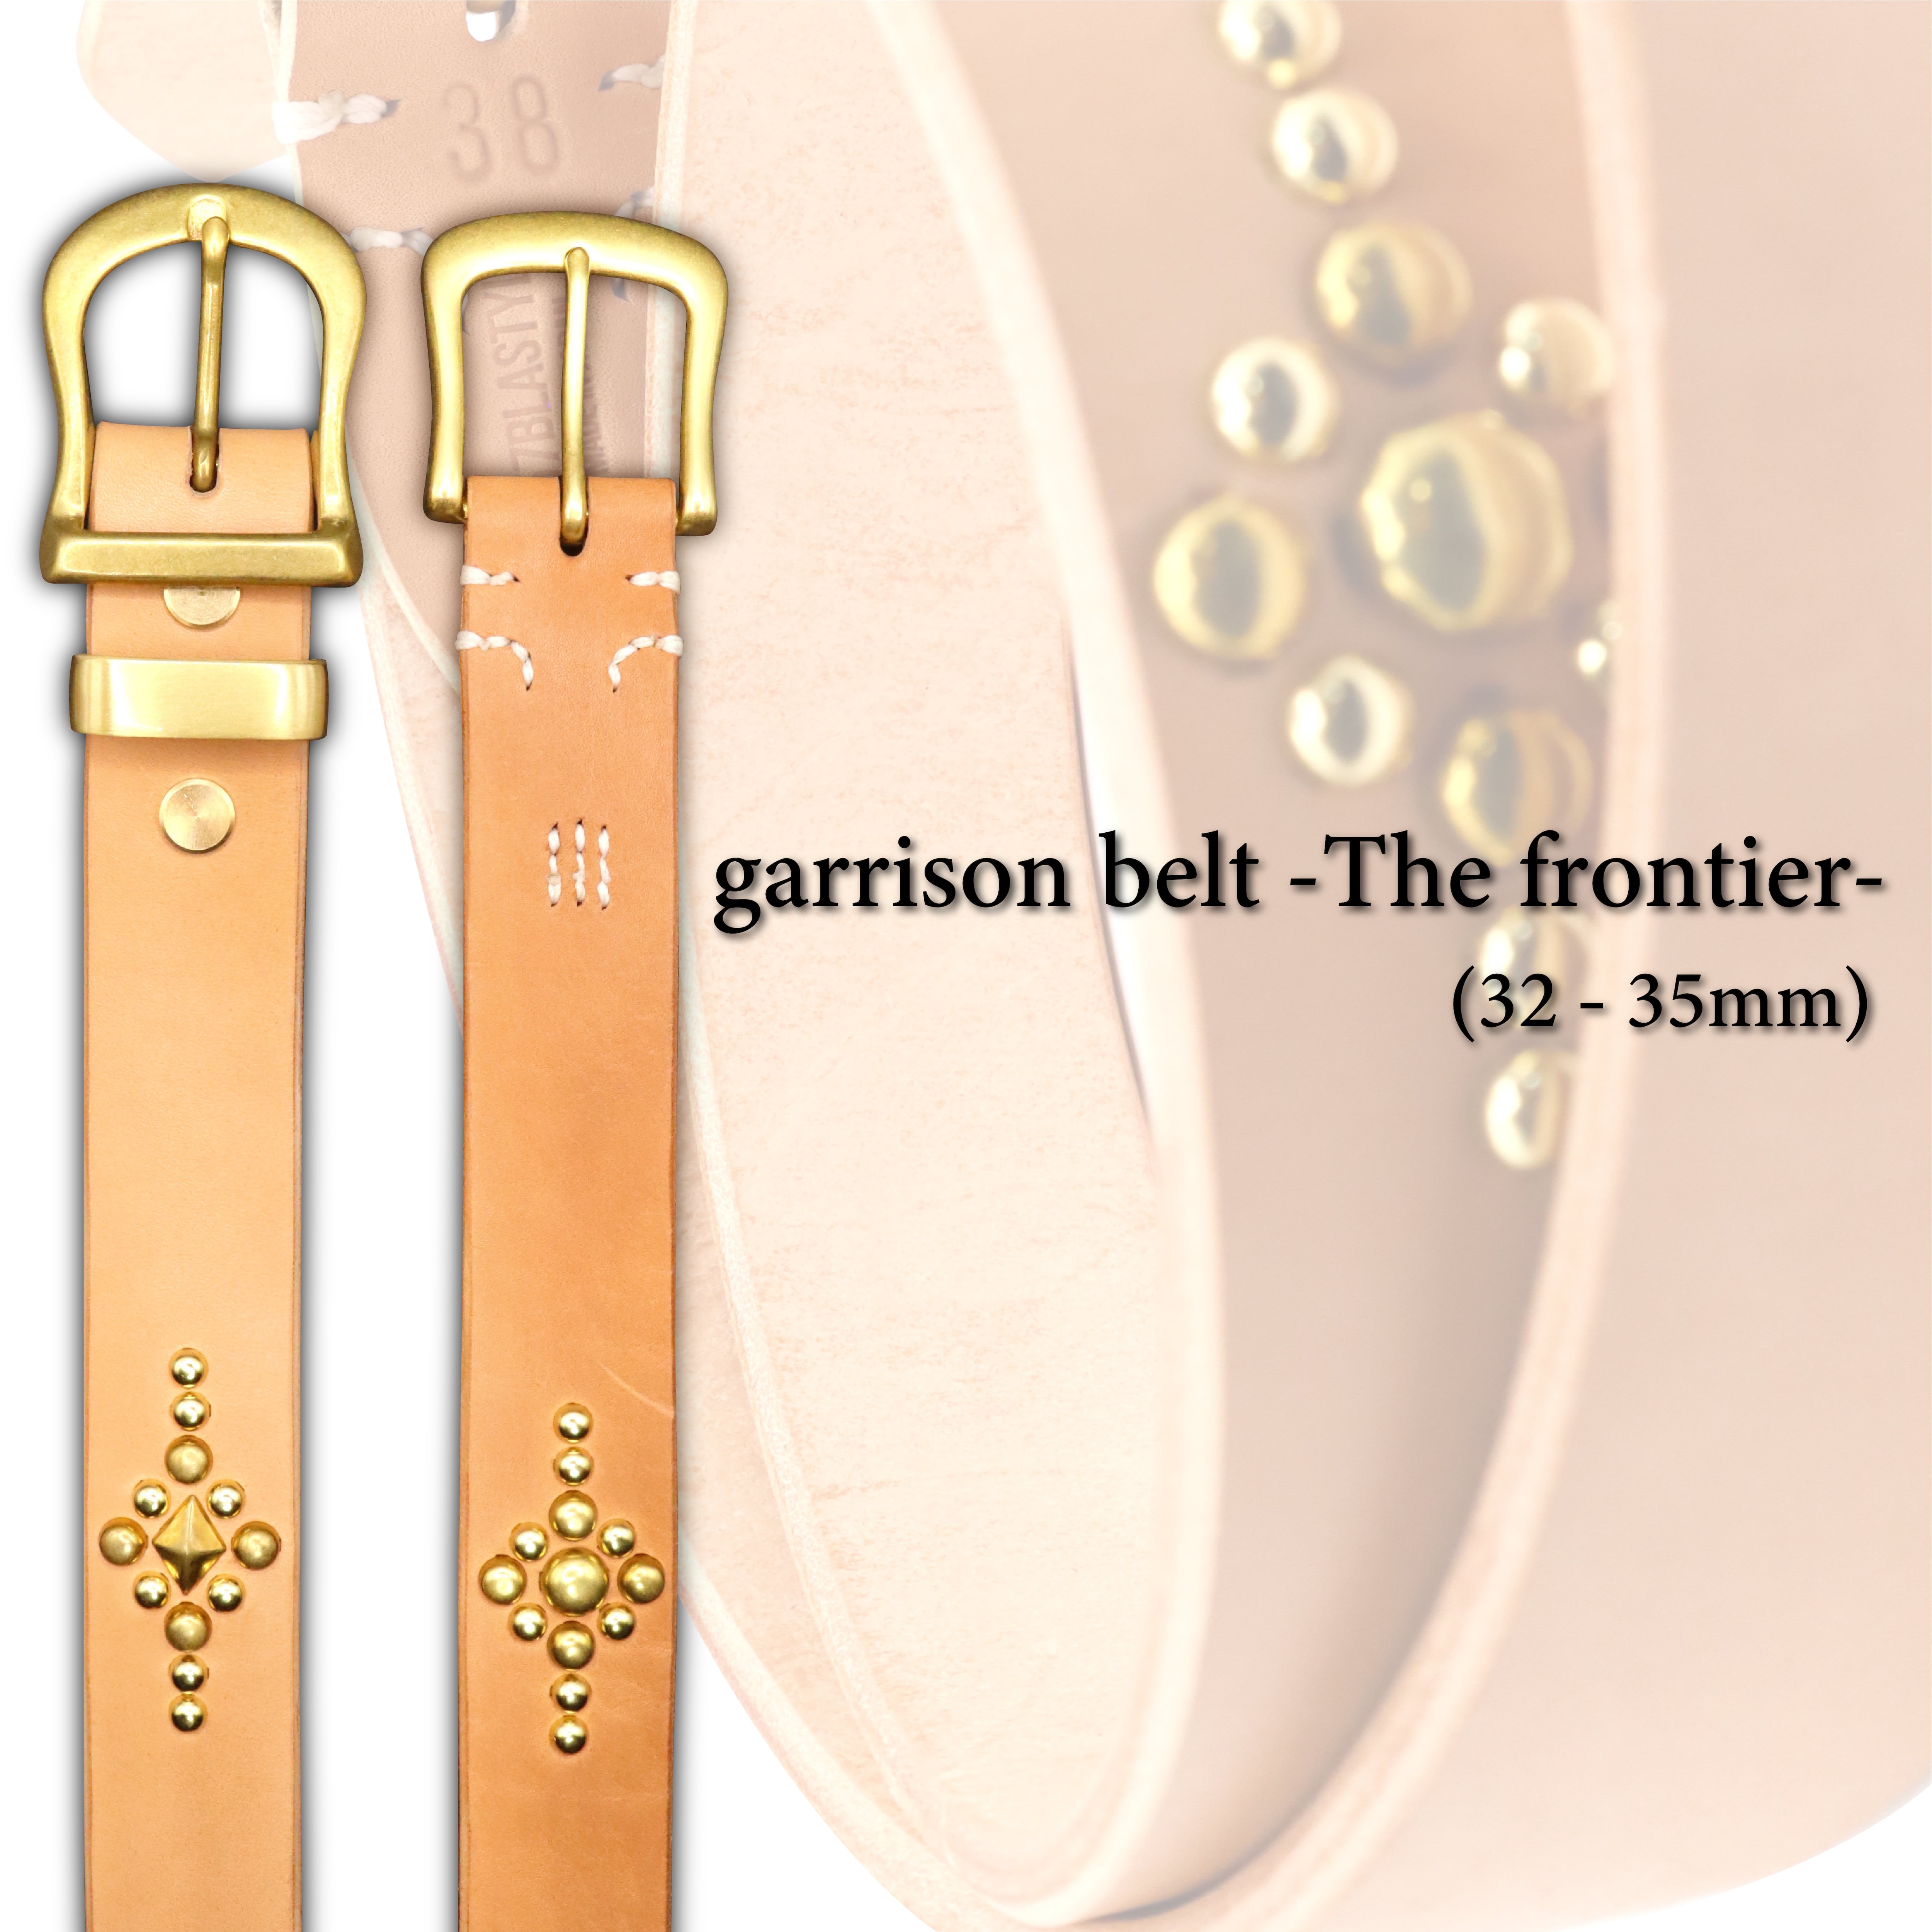 garrison belt -The frontier- (32mm-35mm)【ツール プロダクト